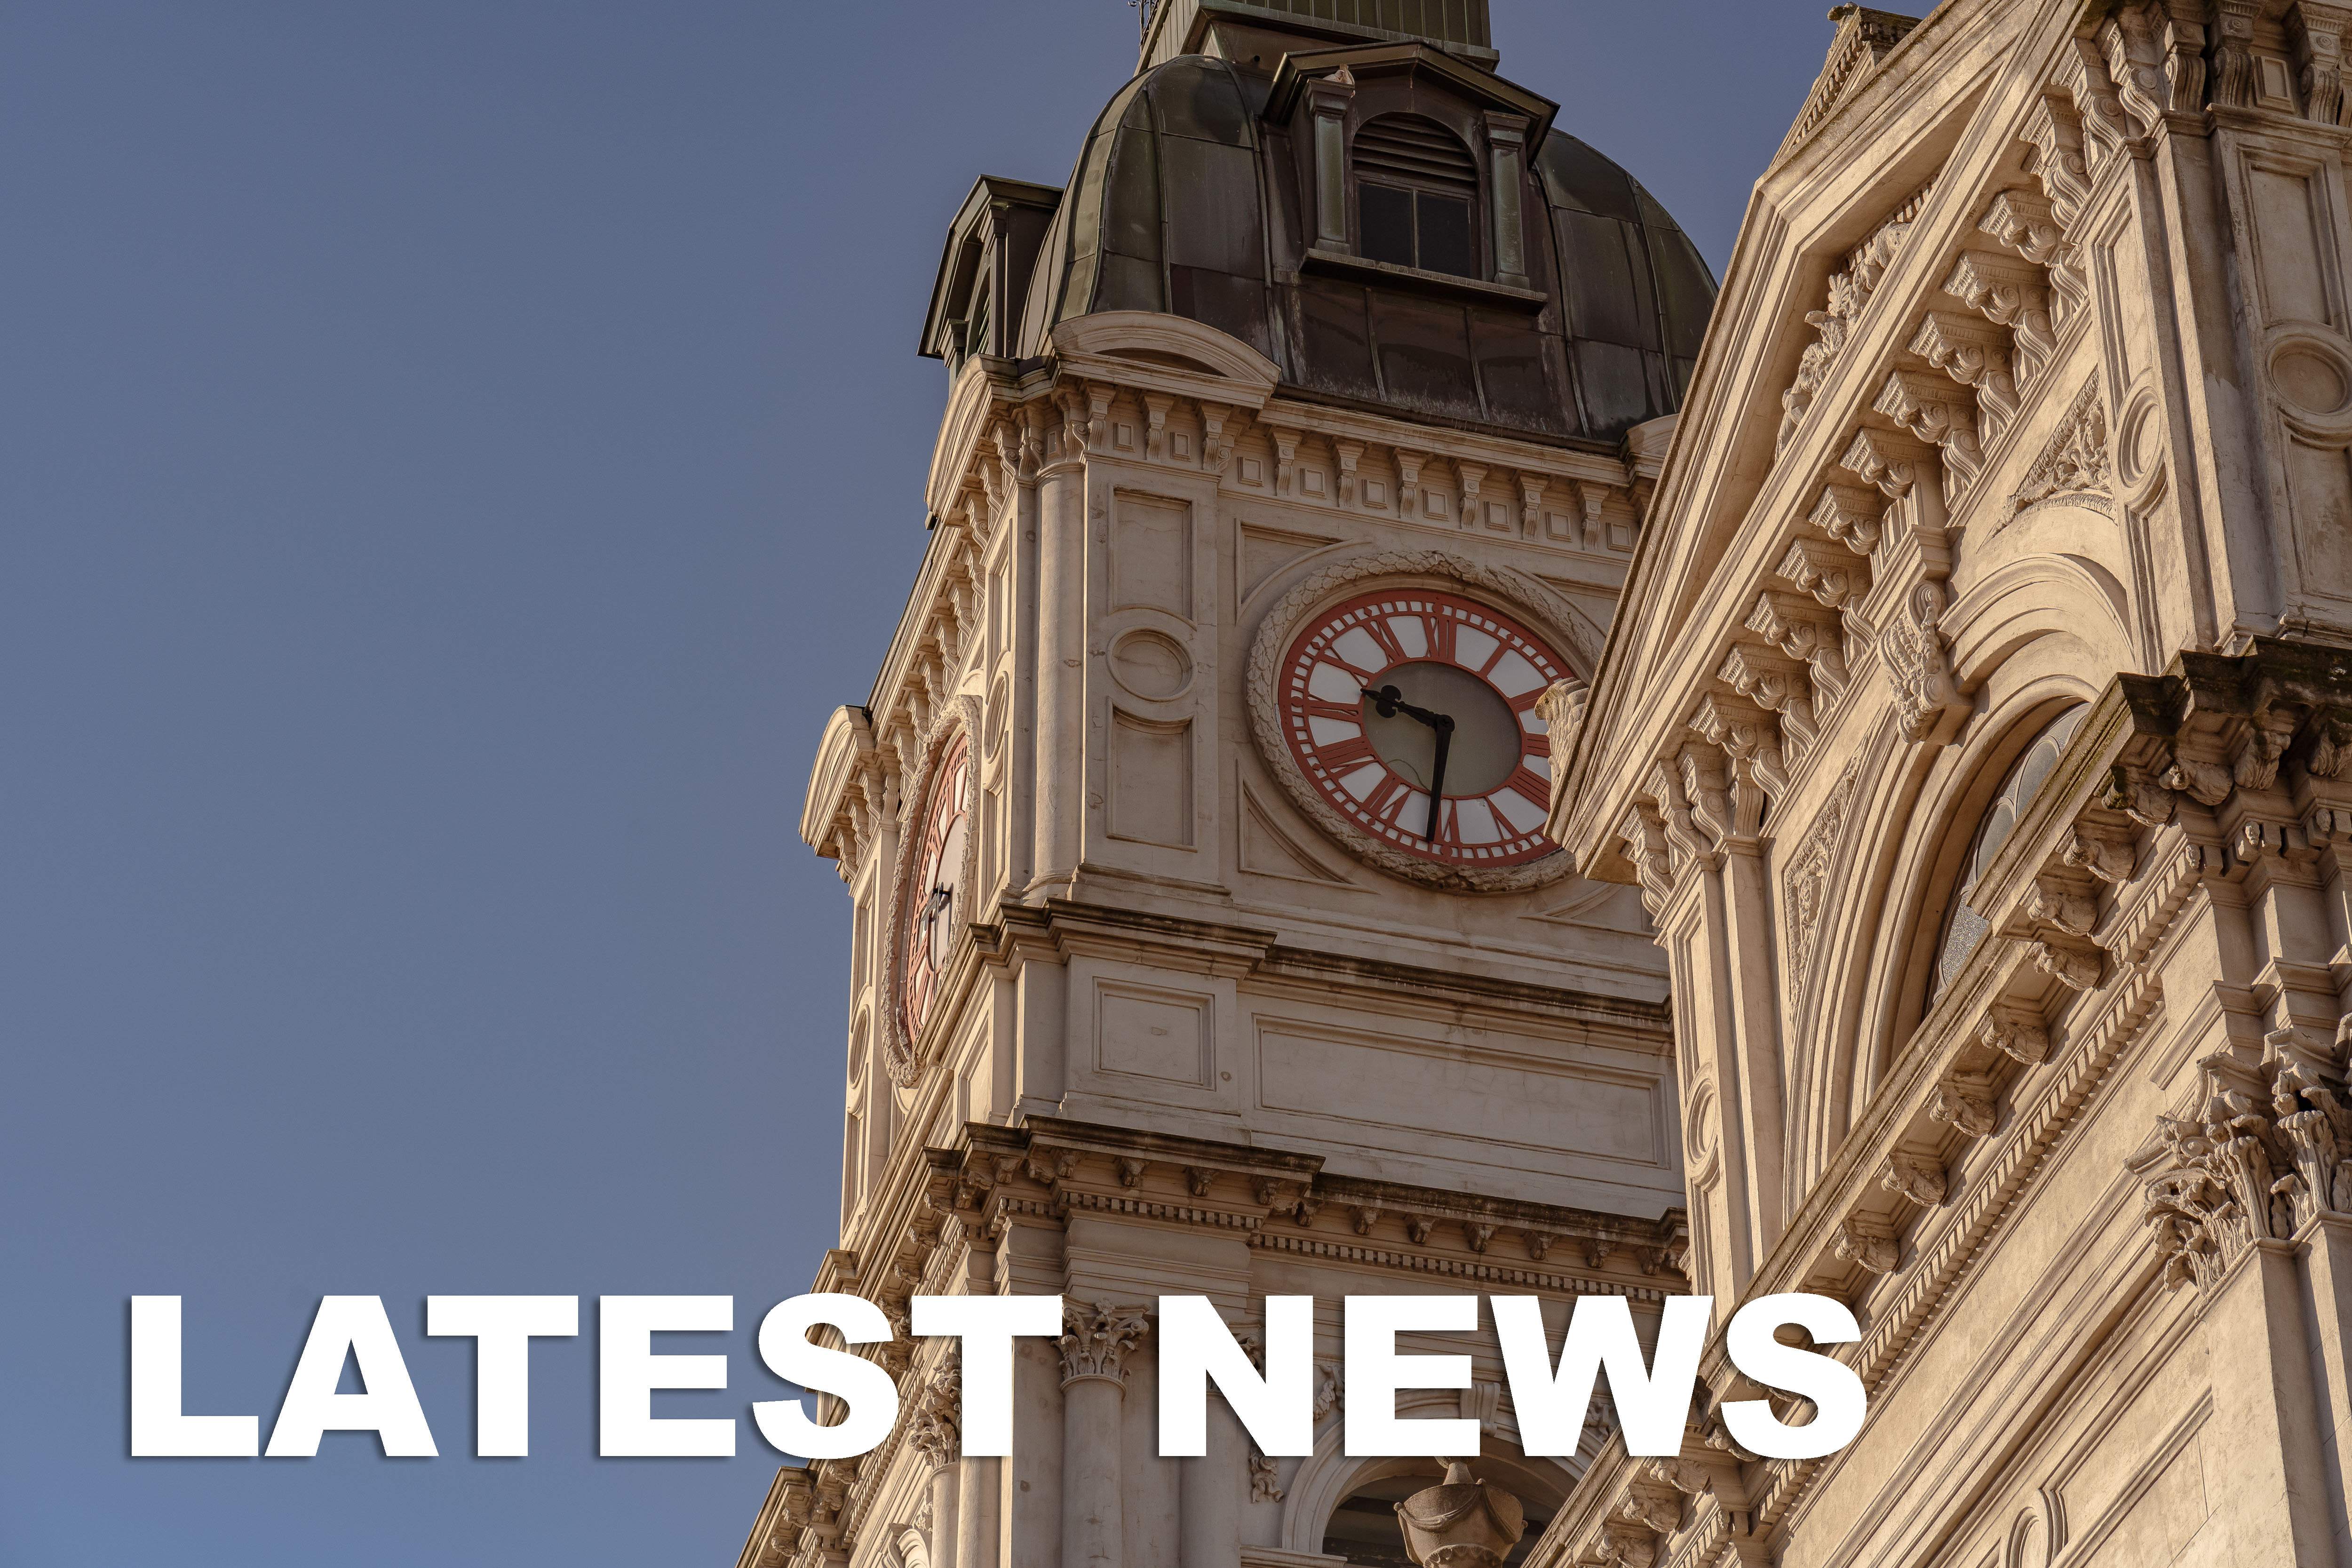 Tile image of Ballarat Town Hall clock that reads Latest News